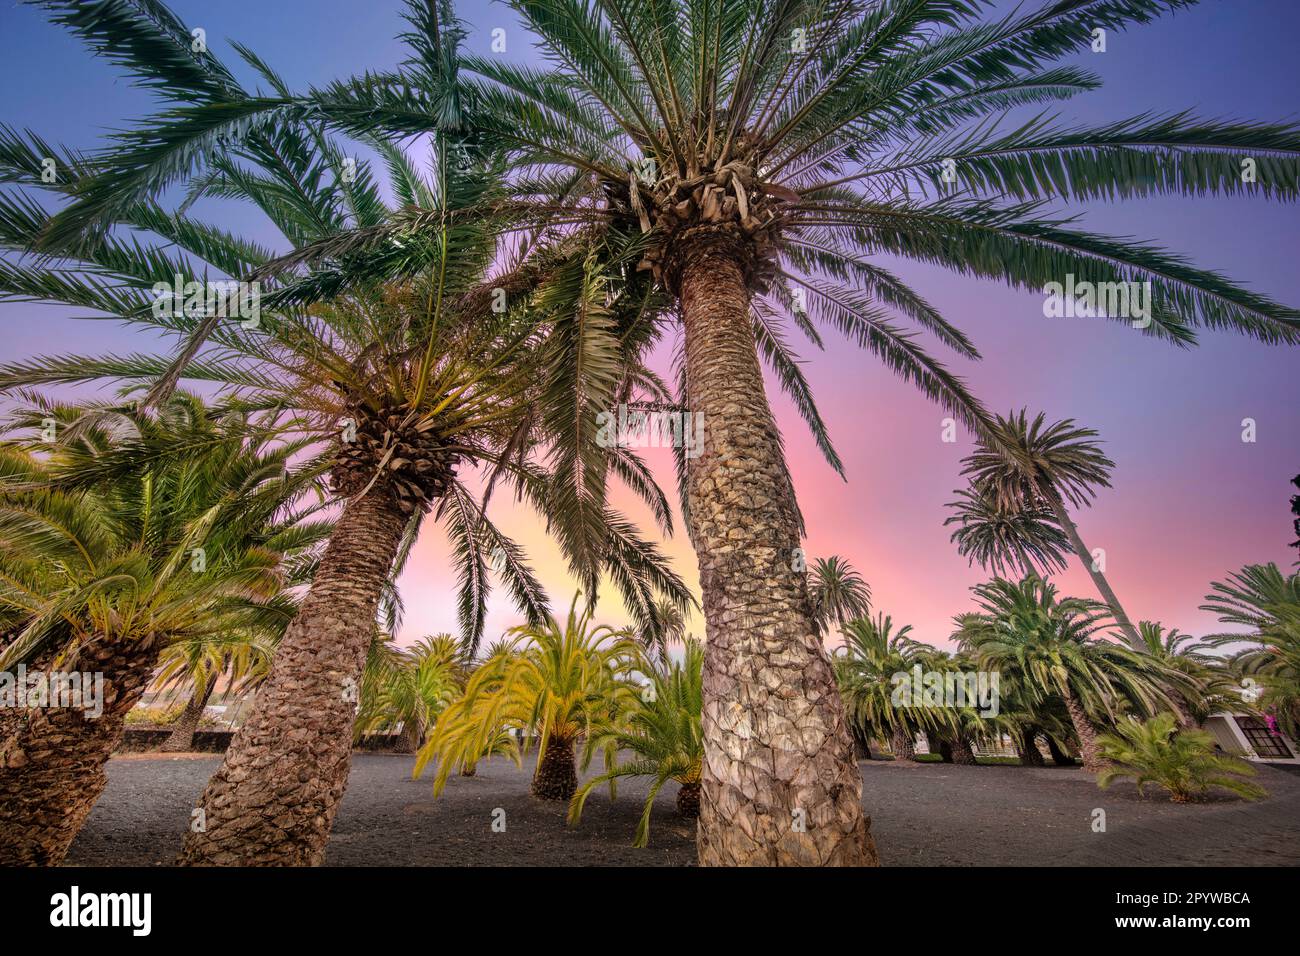 Spanien, Kanarische Inseln, Lanzarote, Haria. Casa, Museo, Fundacion Cesar Manrique. Wohnhaus. Palmengarten bei Sonnenuntergang. Stockfoto